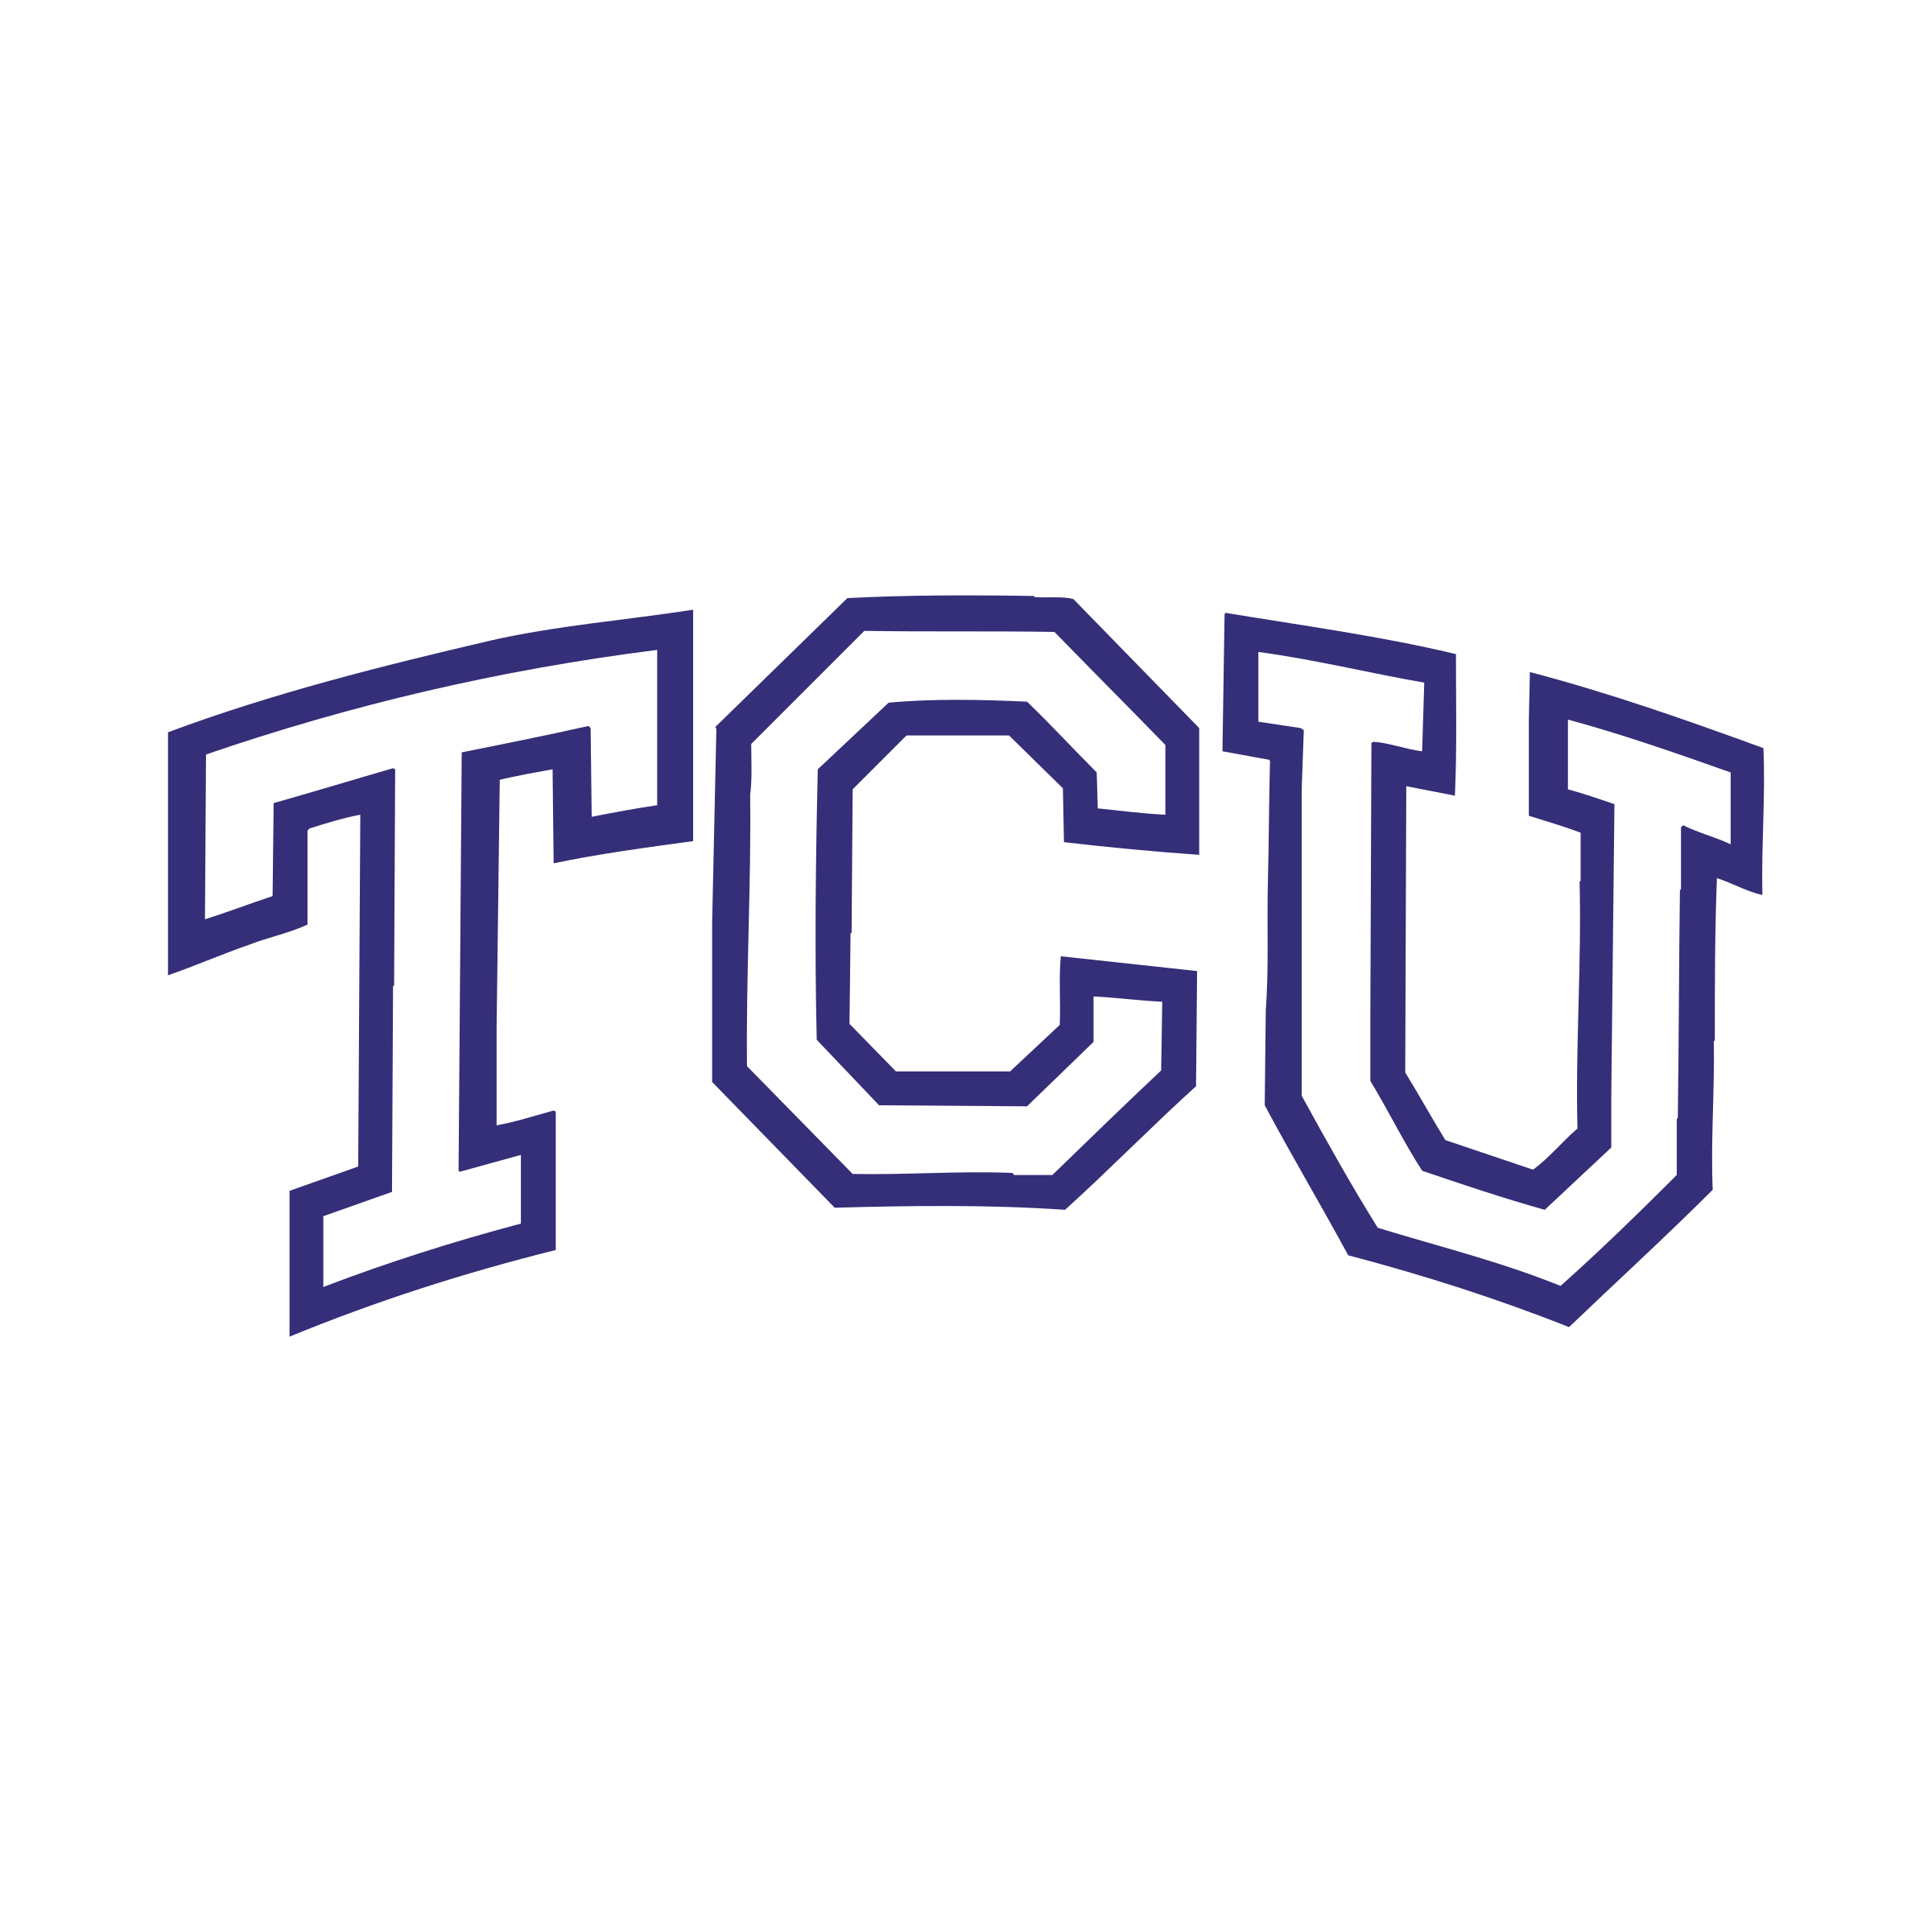 TCU Logo - TCU Logo PNG Transparent & SVG Vector - Freebie Supply